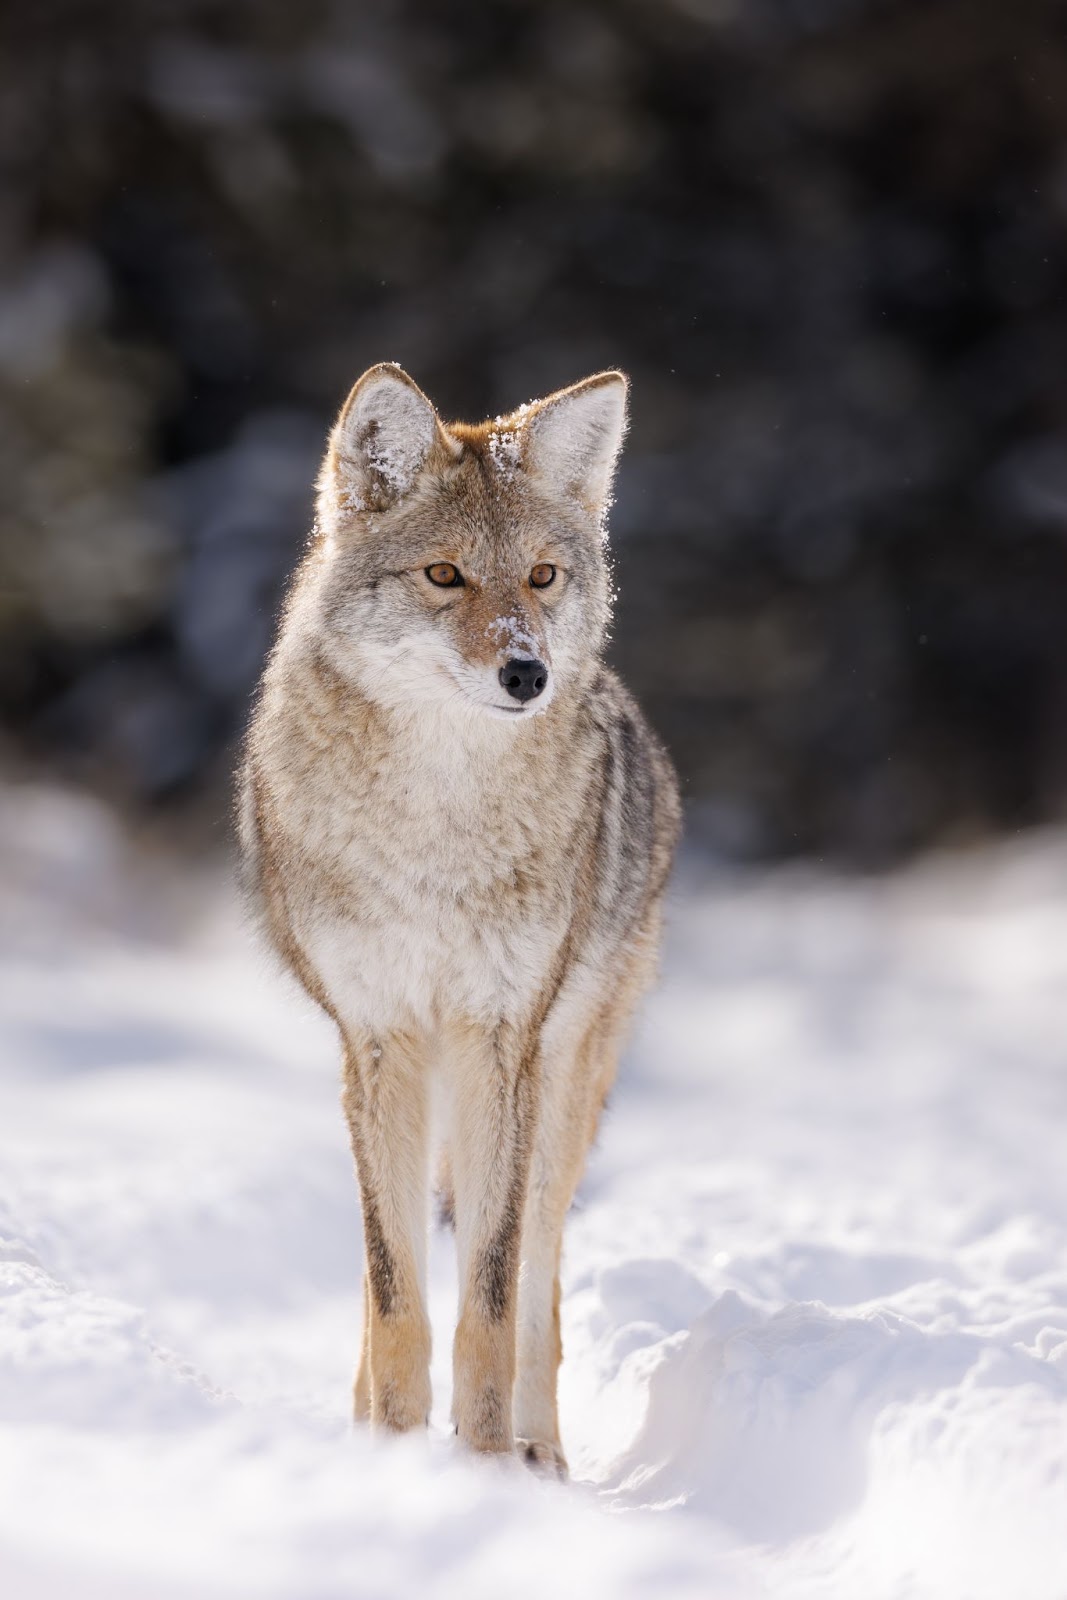 A closeup photo of a coyote